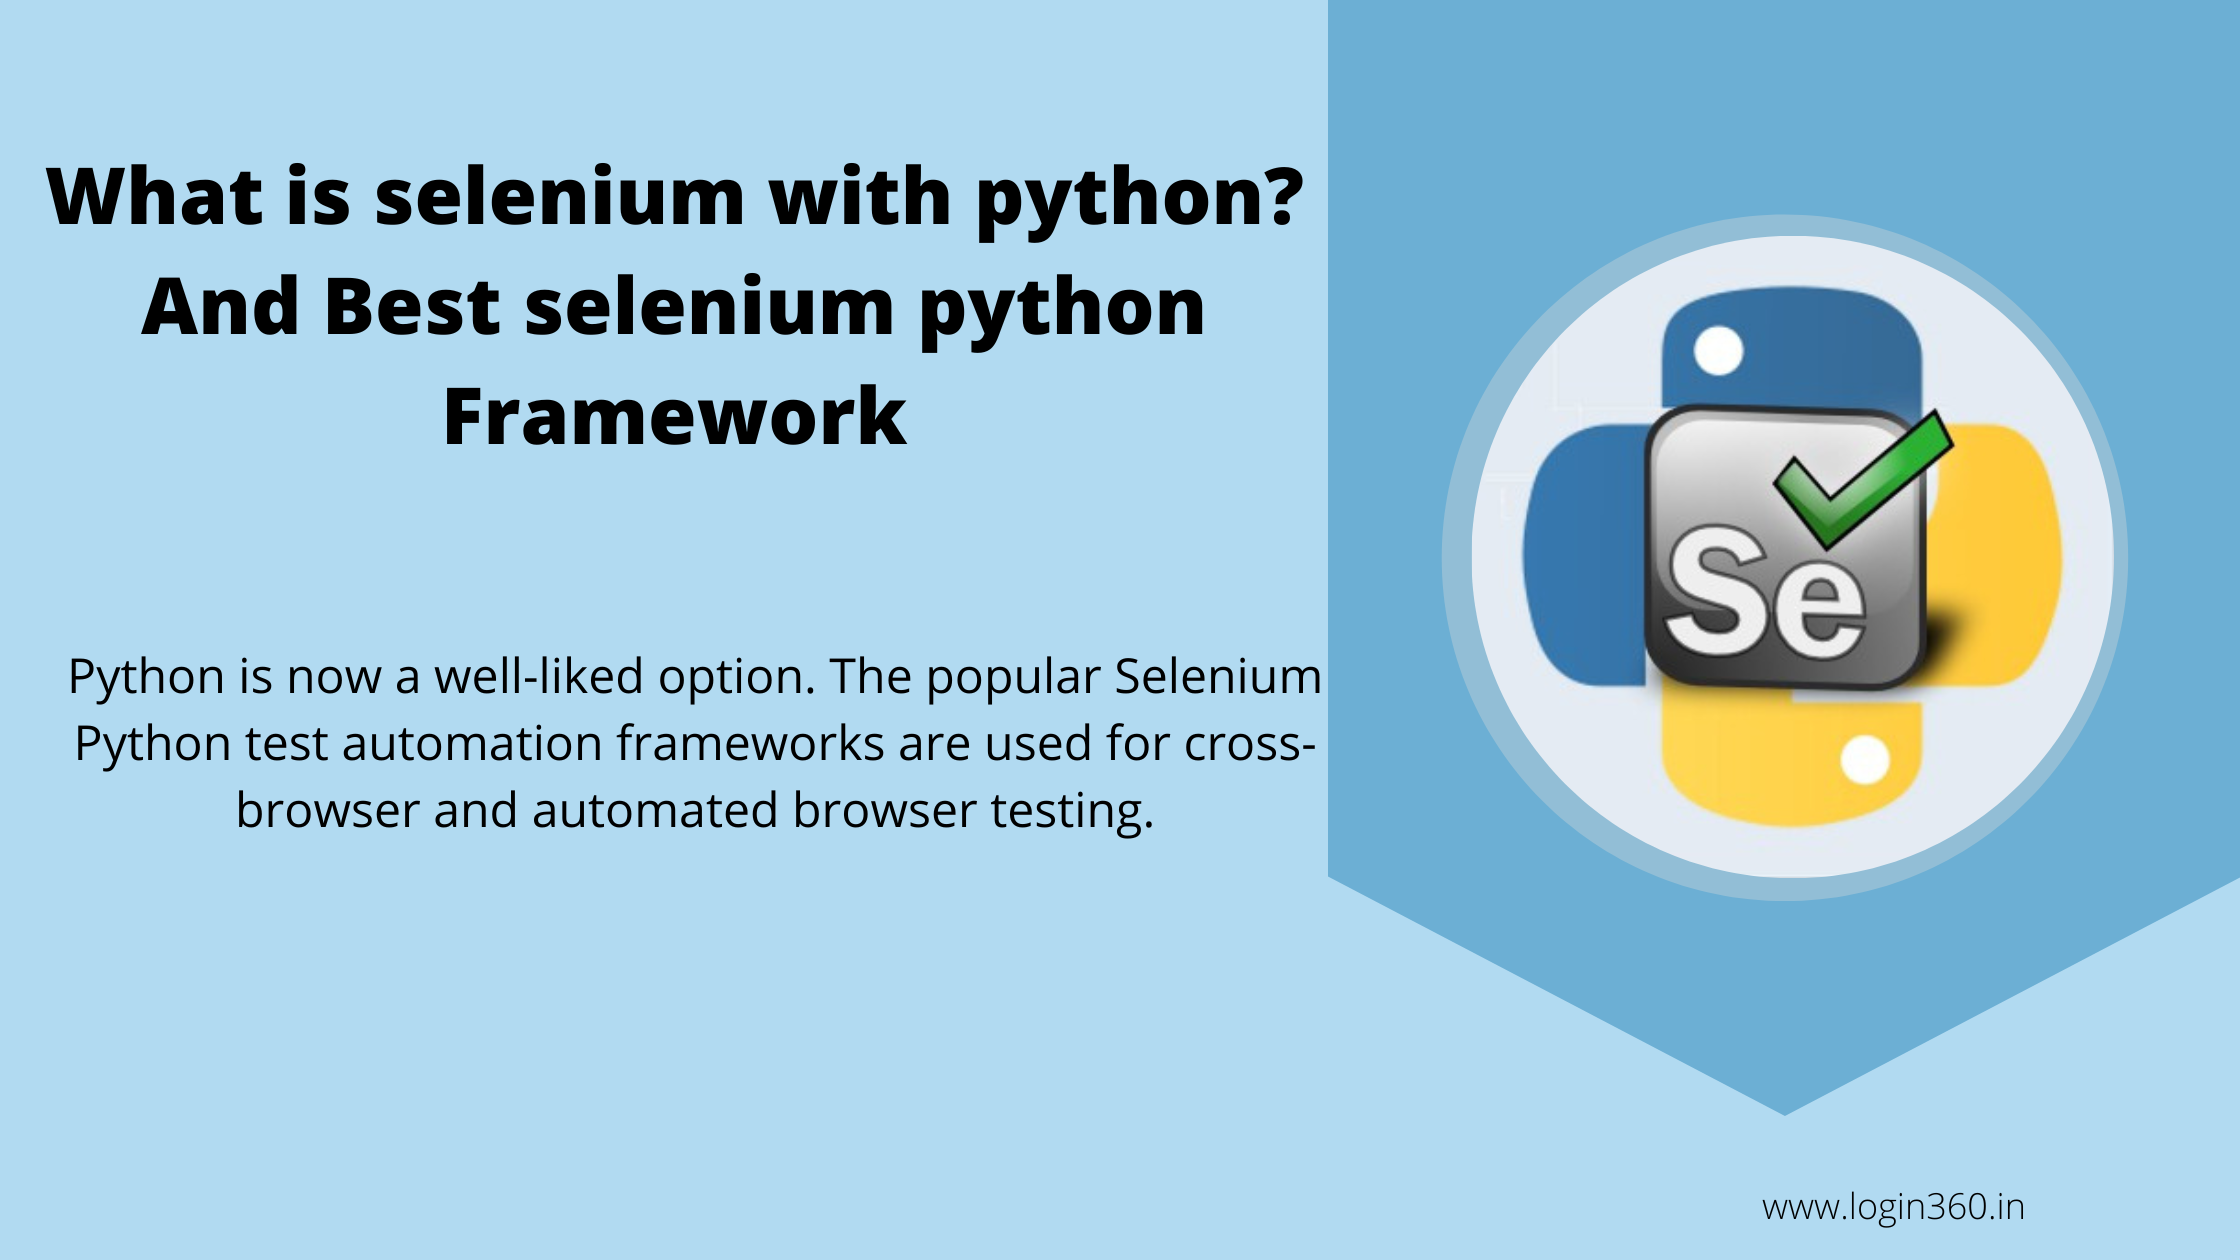 Selenium with python